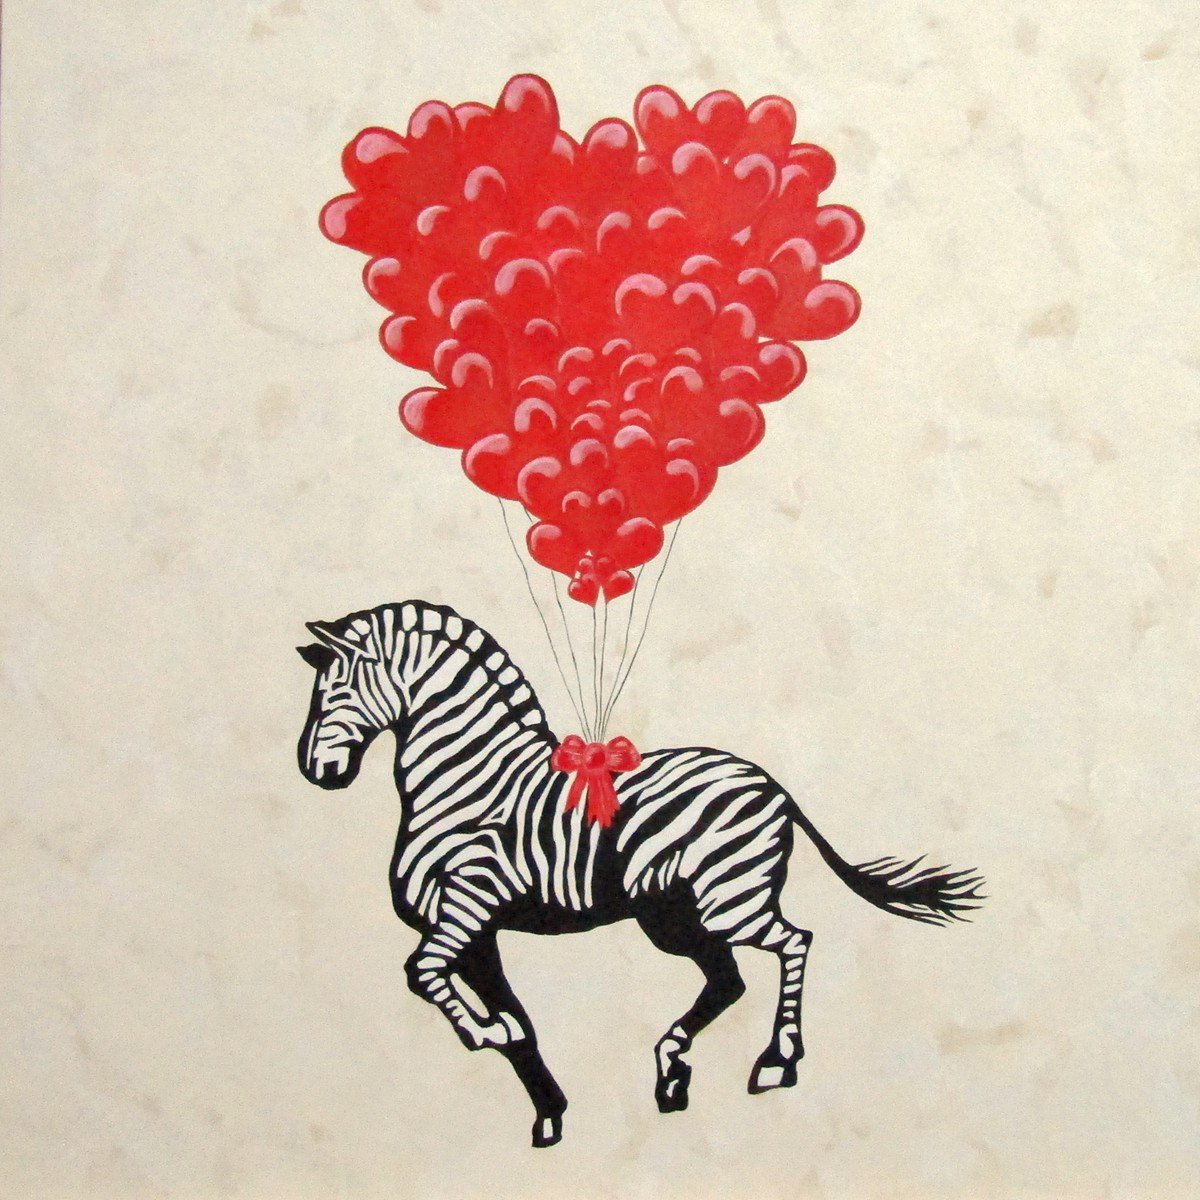 Zebra and love heart balloons by oconnart